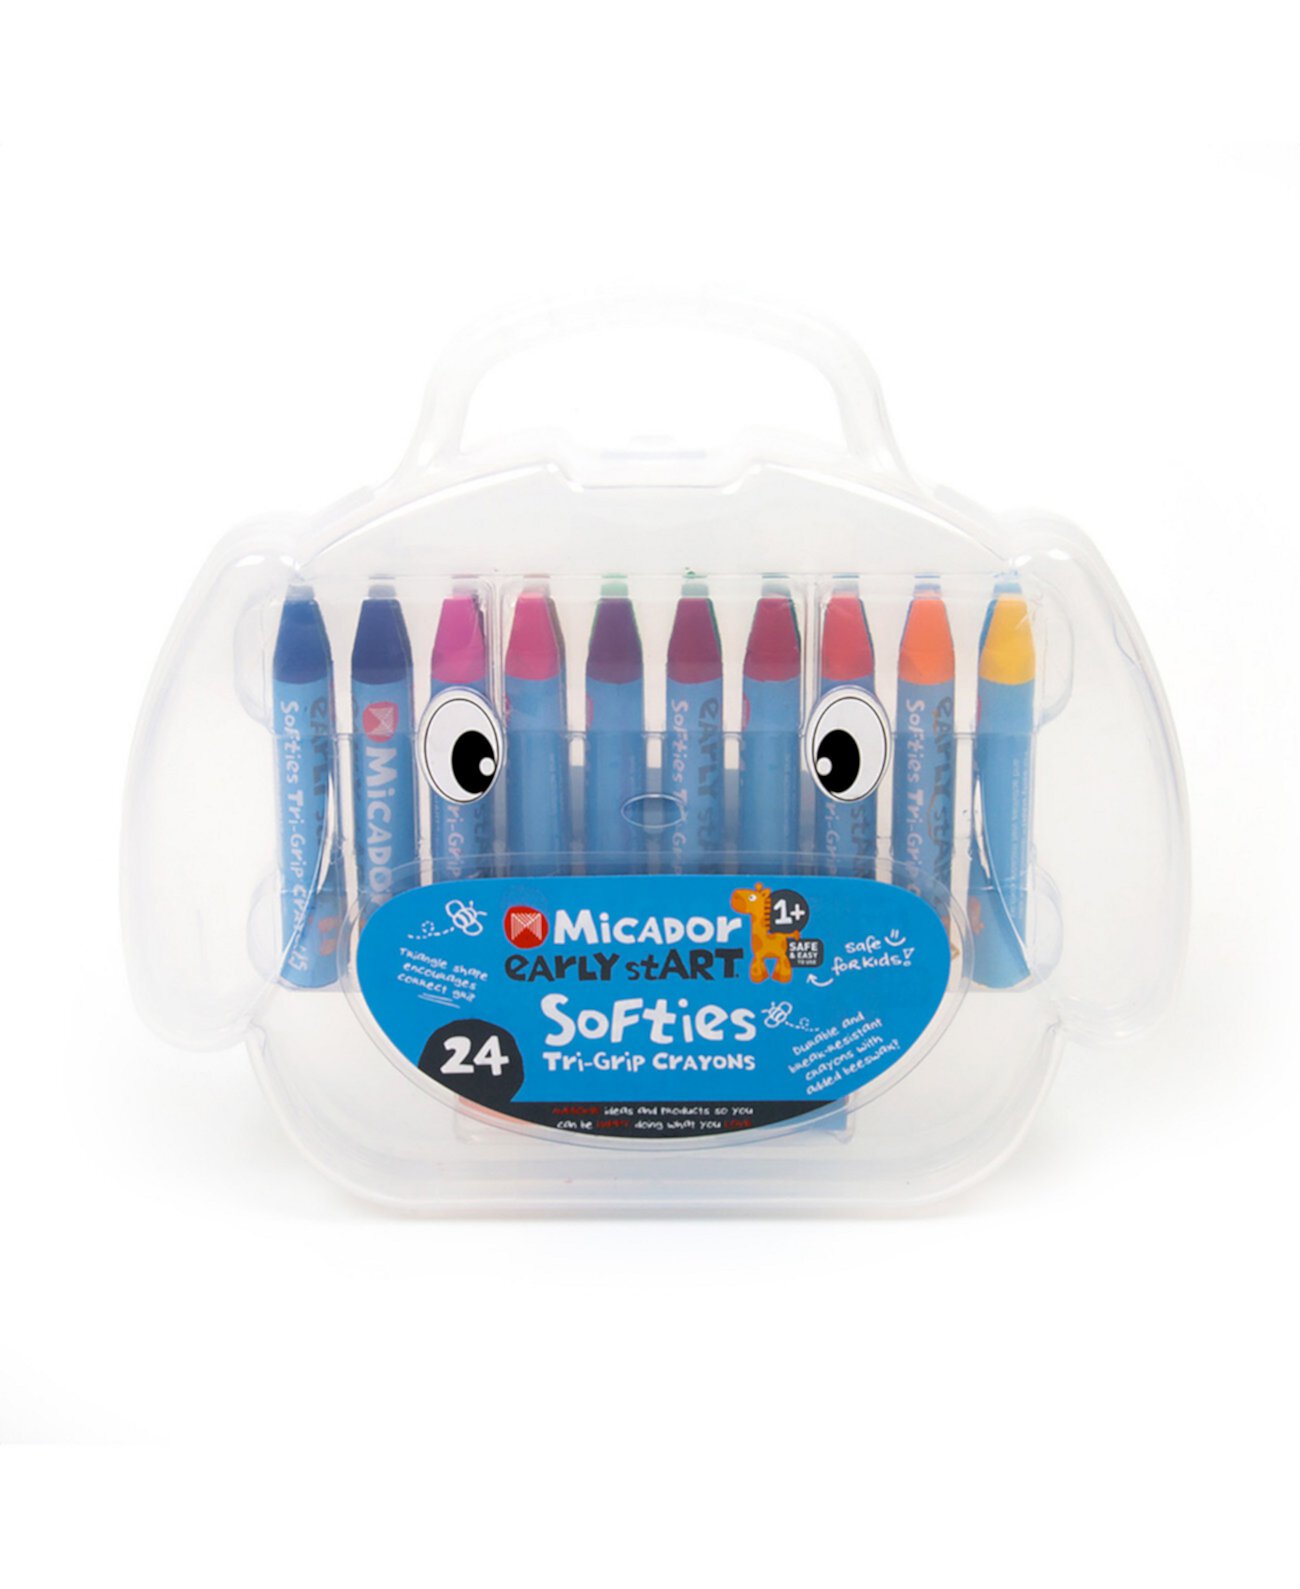 Softitri-Grip Crayons, 24-Crayon Case Micador early stART